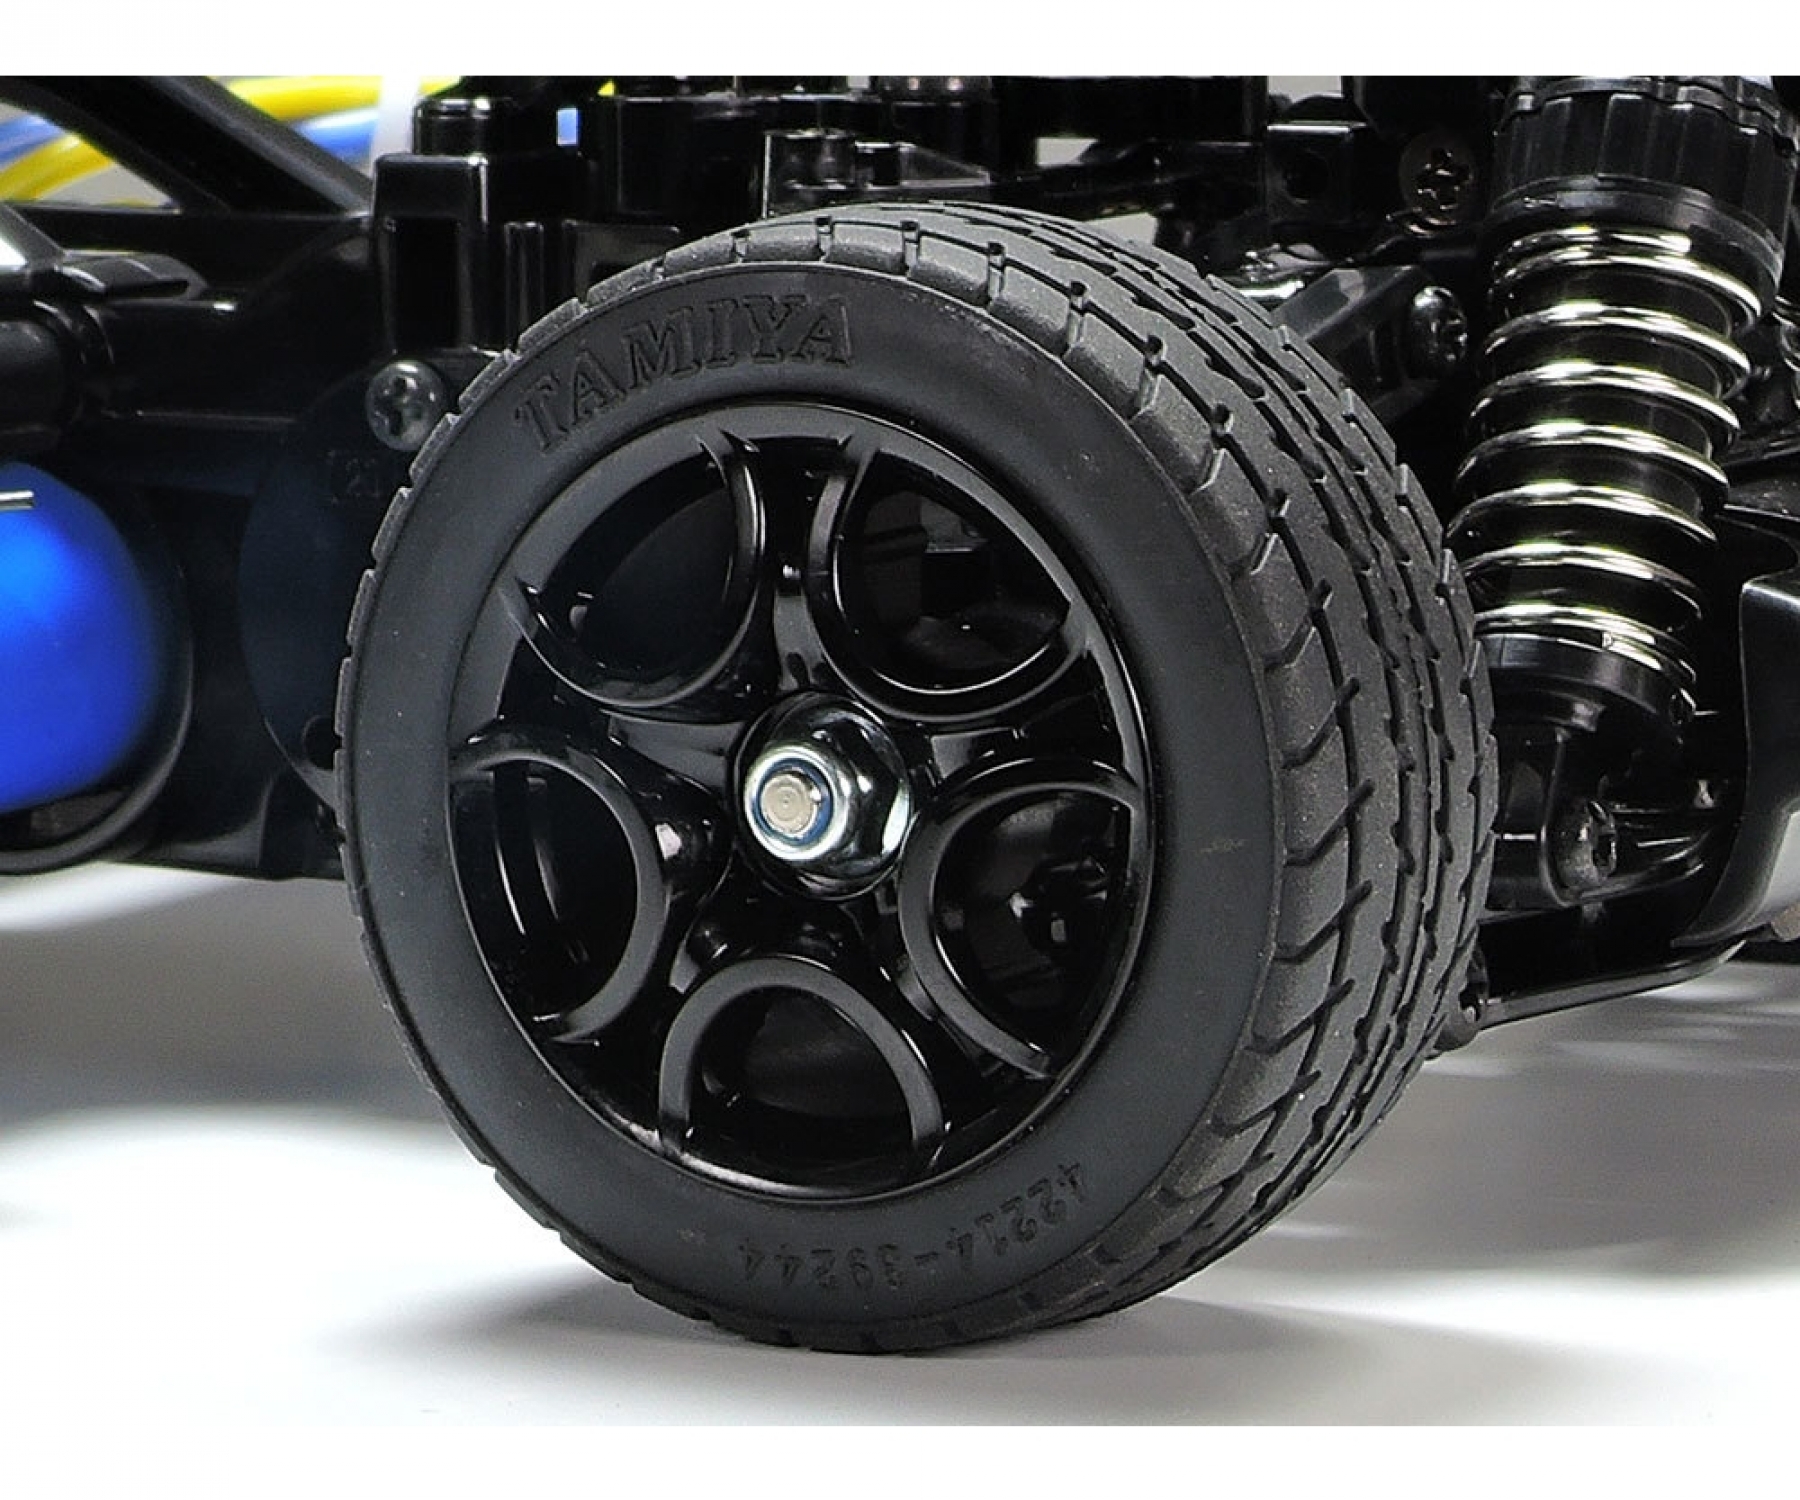 Kayhobbies - Onlineshop für RC Cars - Drift - Crawler - Tamiya 58679